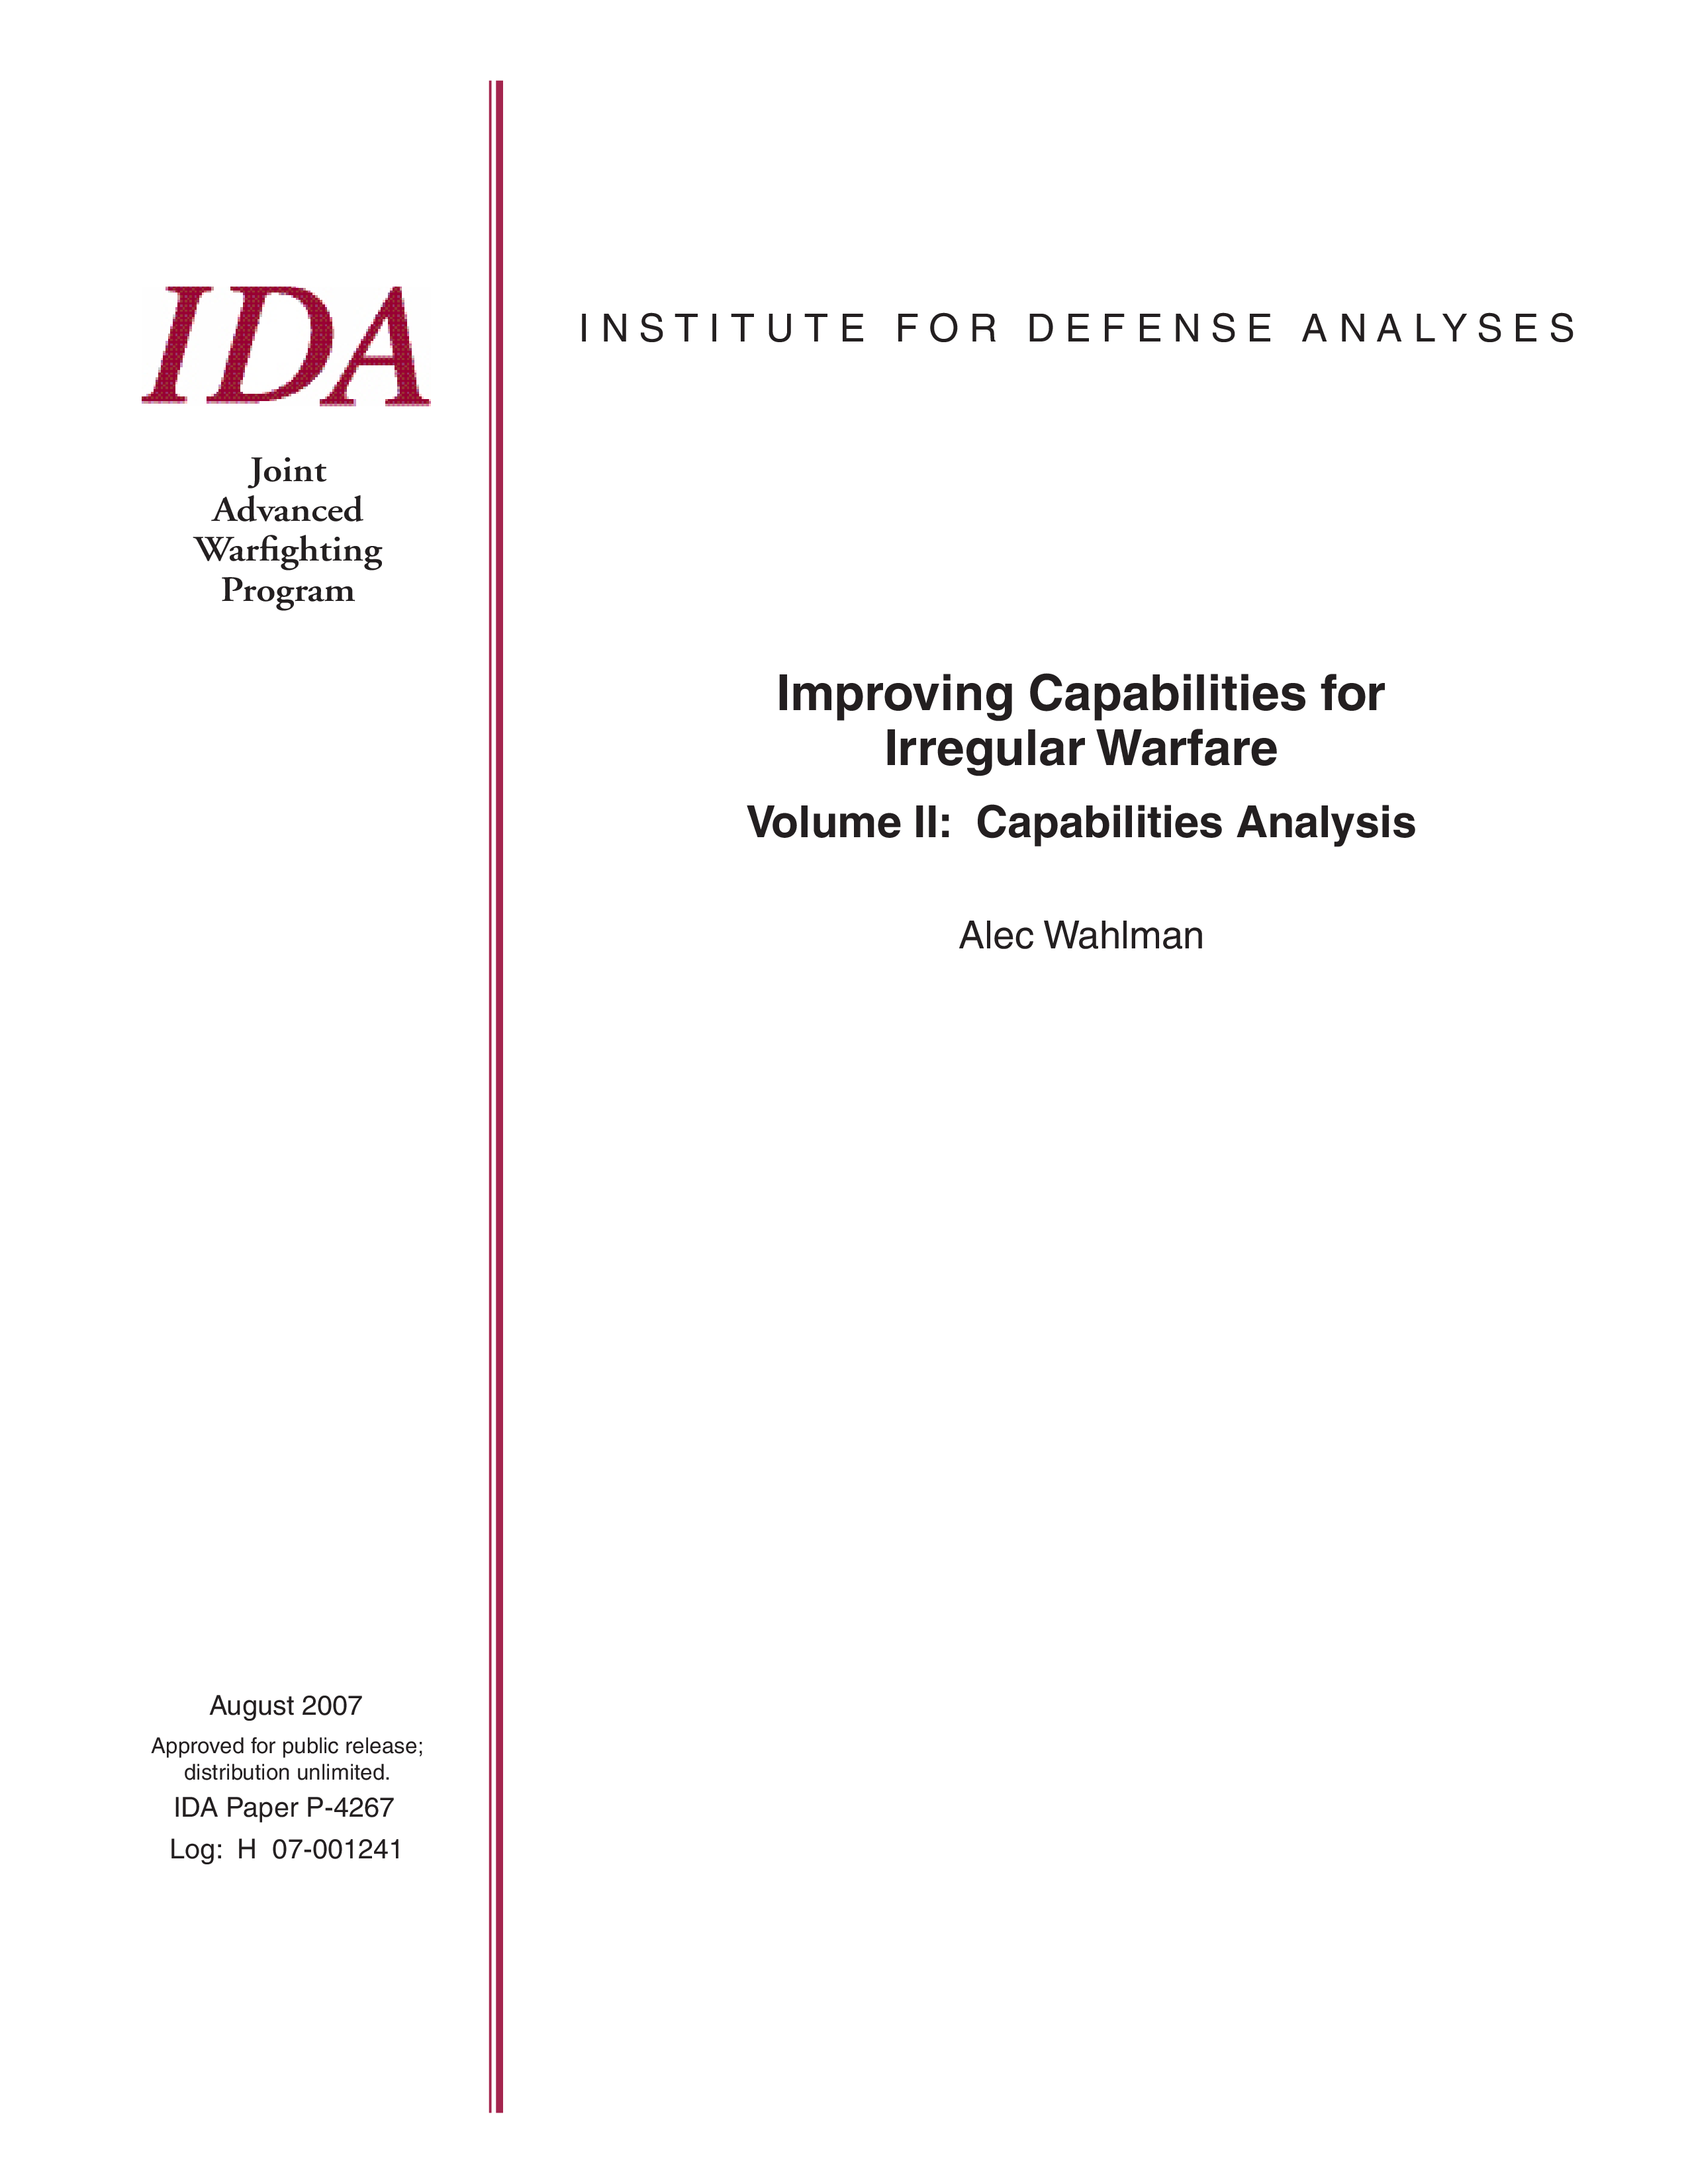 Improving Capabilities for Irregular Warfare Volume II: Capabilities Analysis